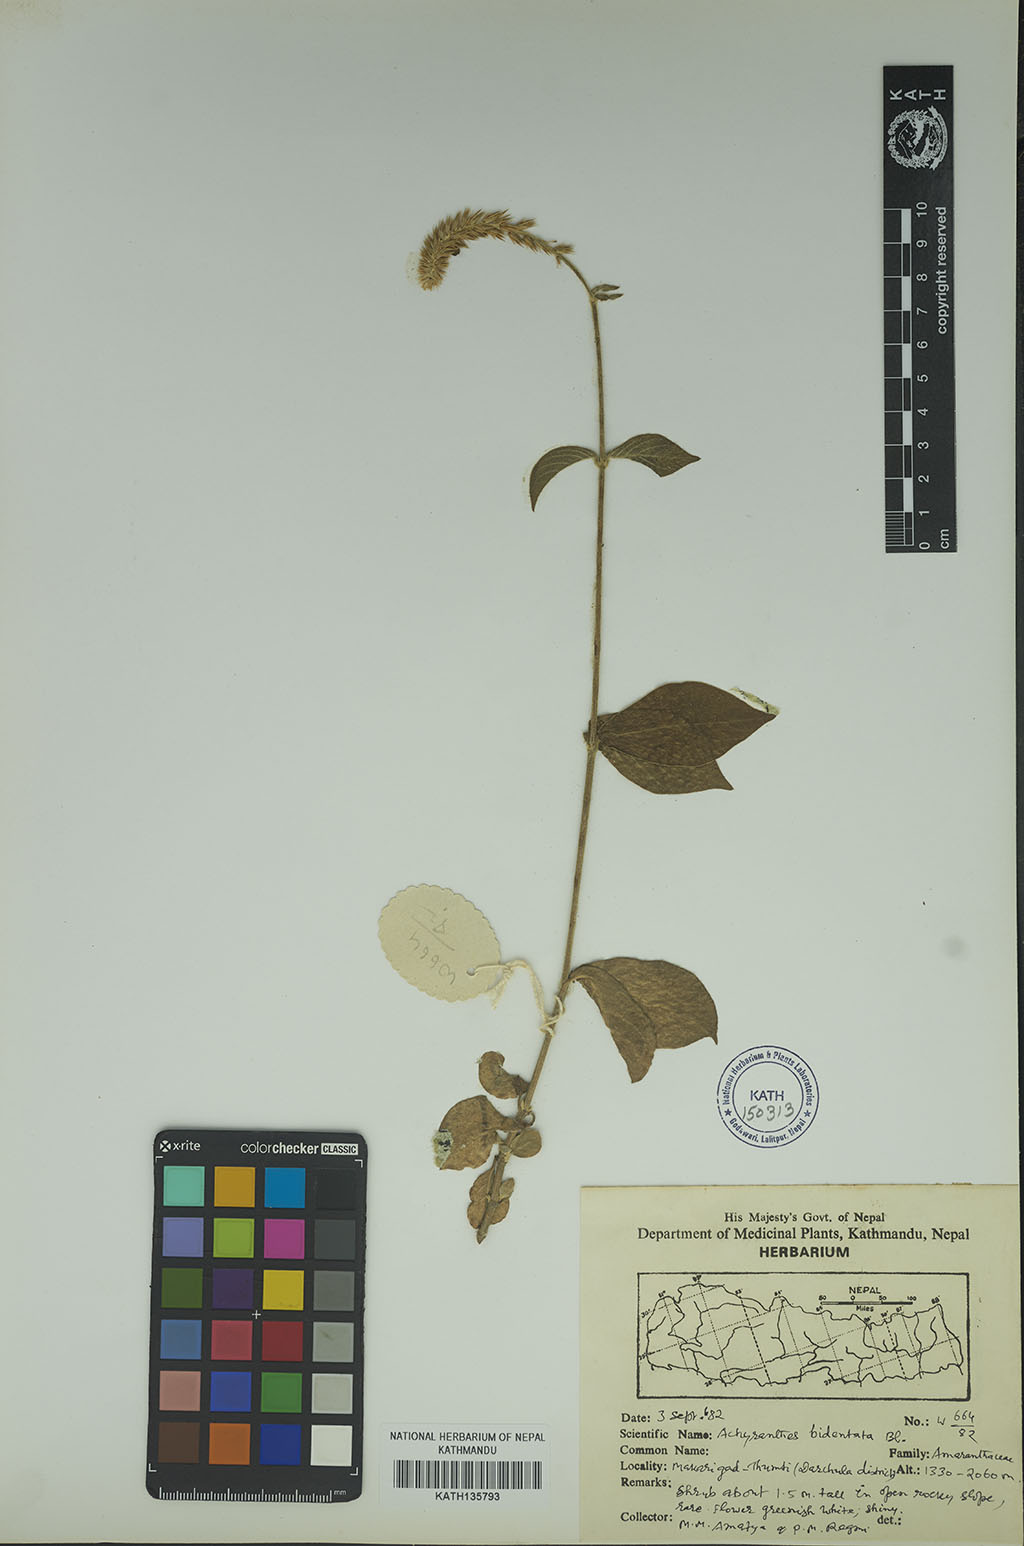 Achyranthes bidentata Blume